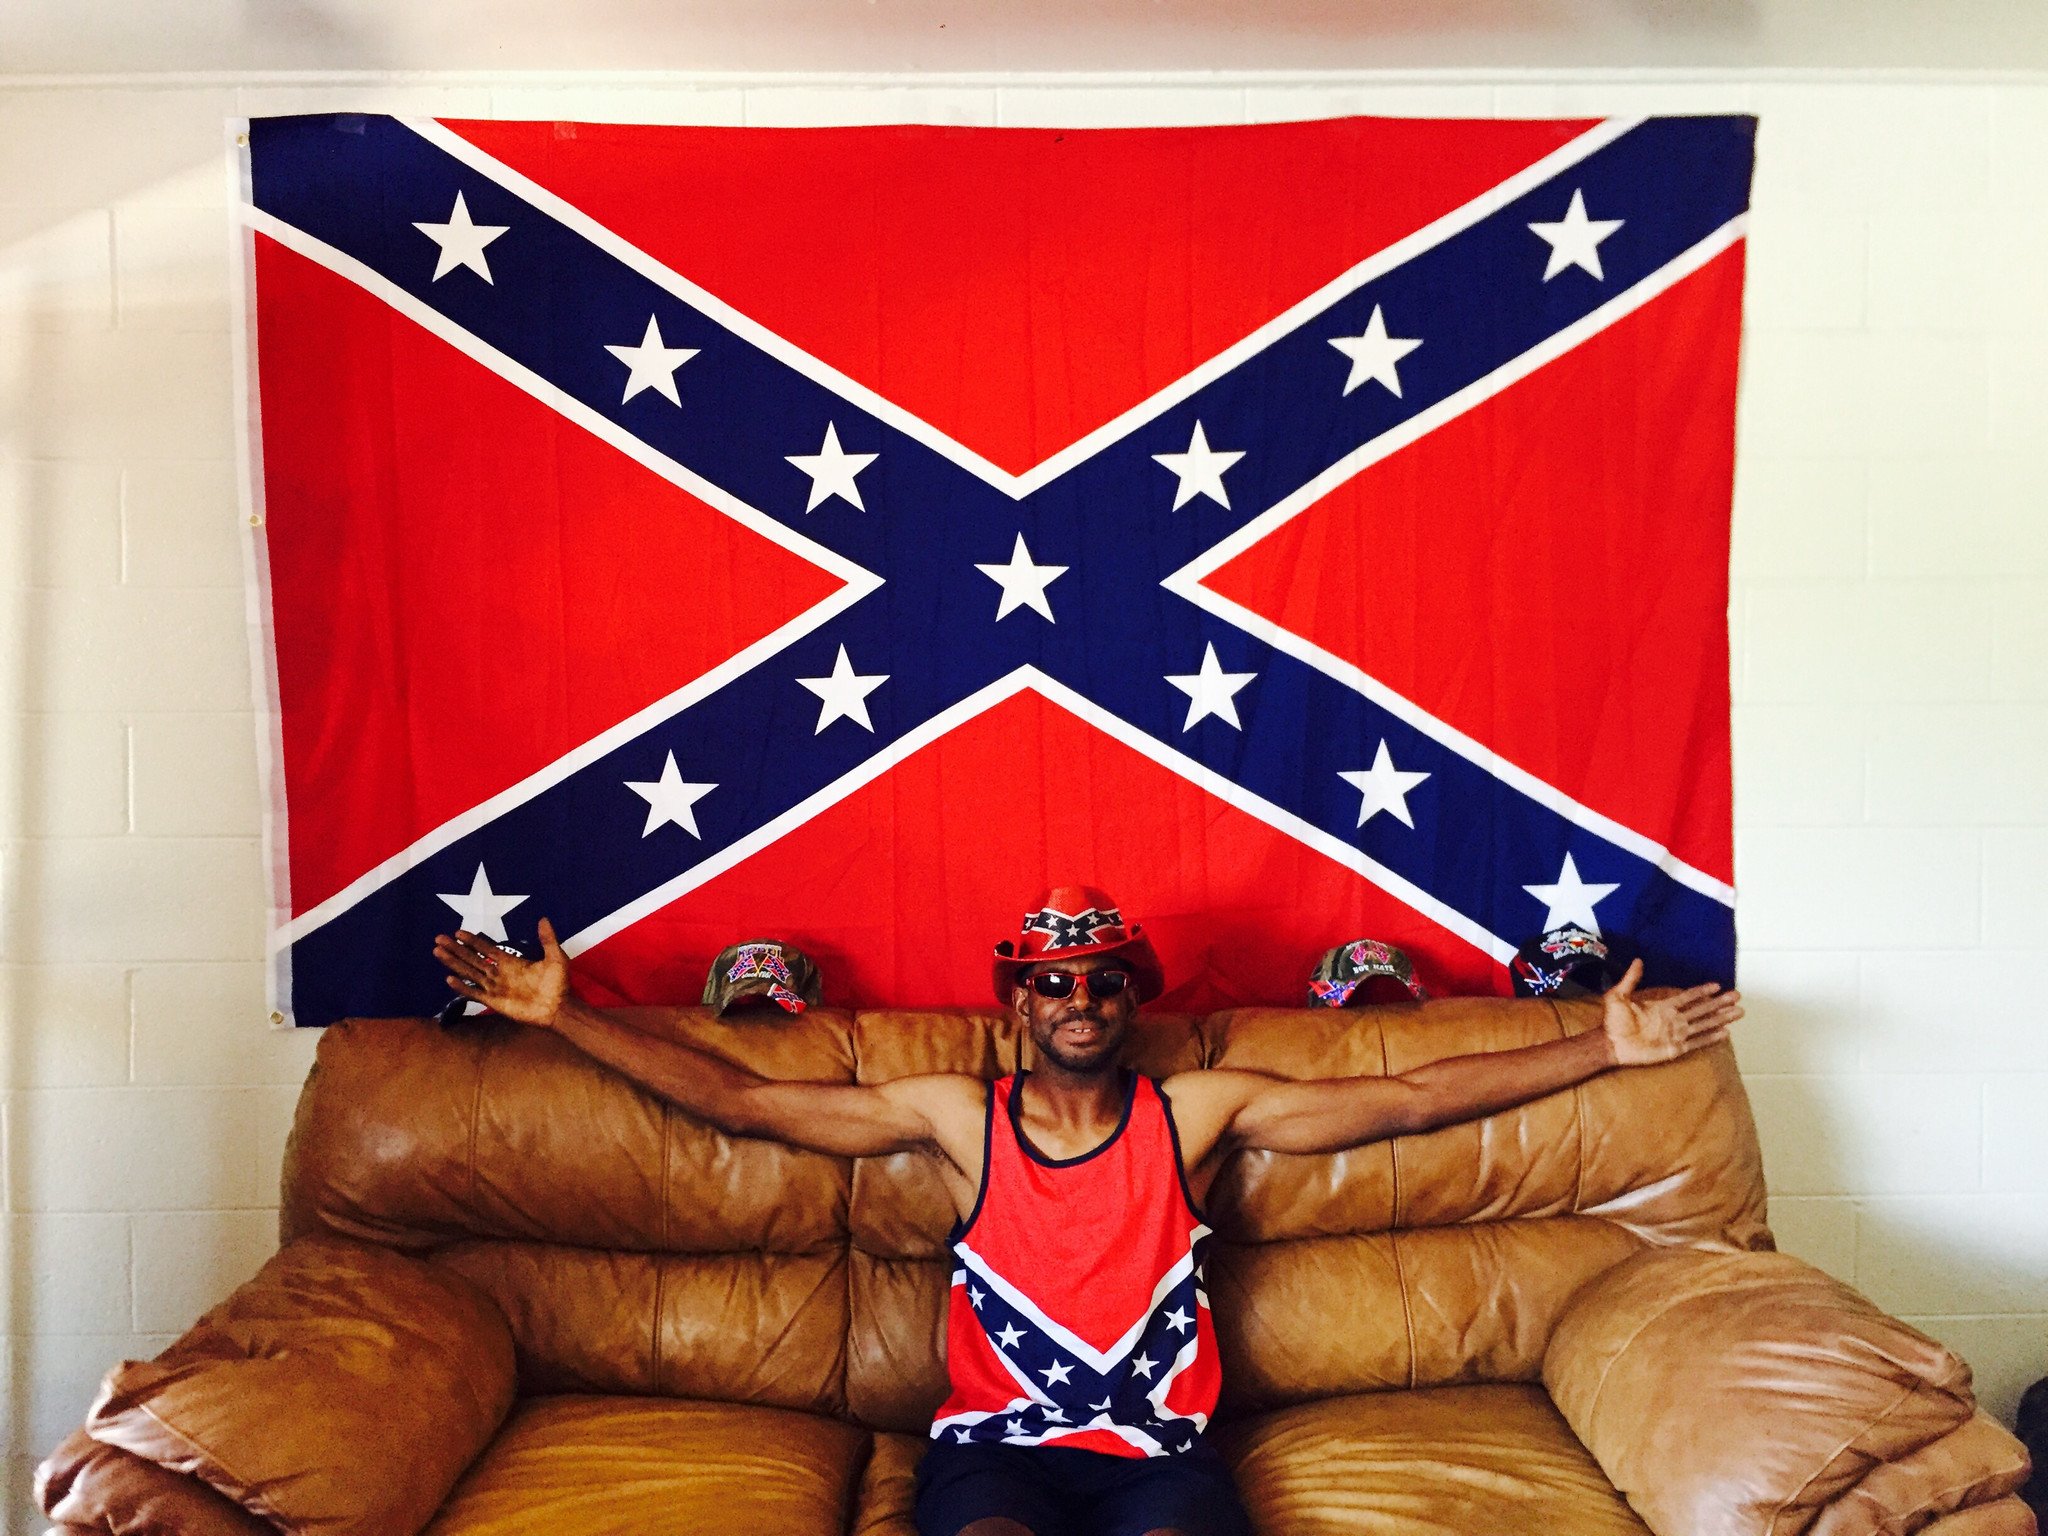 Confederate Battle Flag 5 x 8